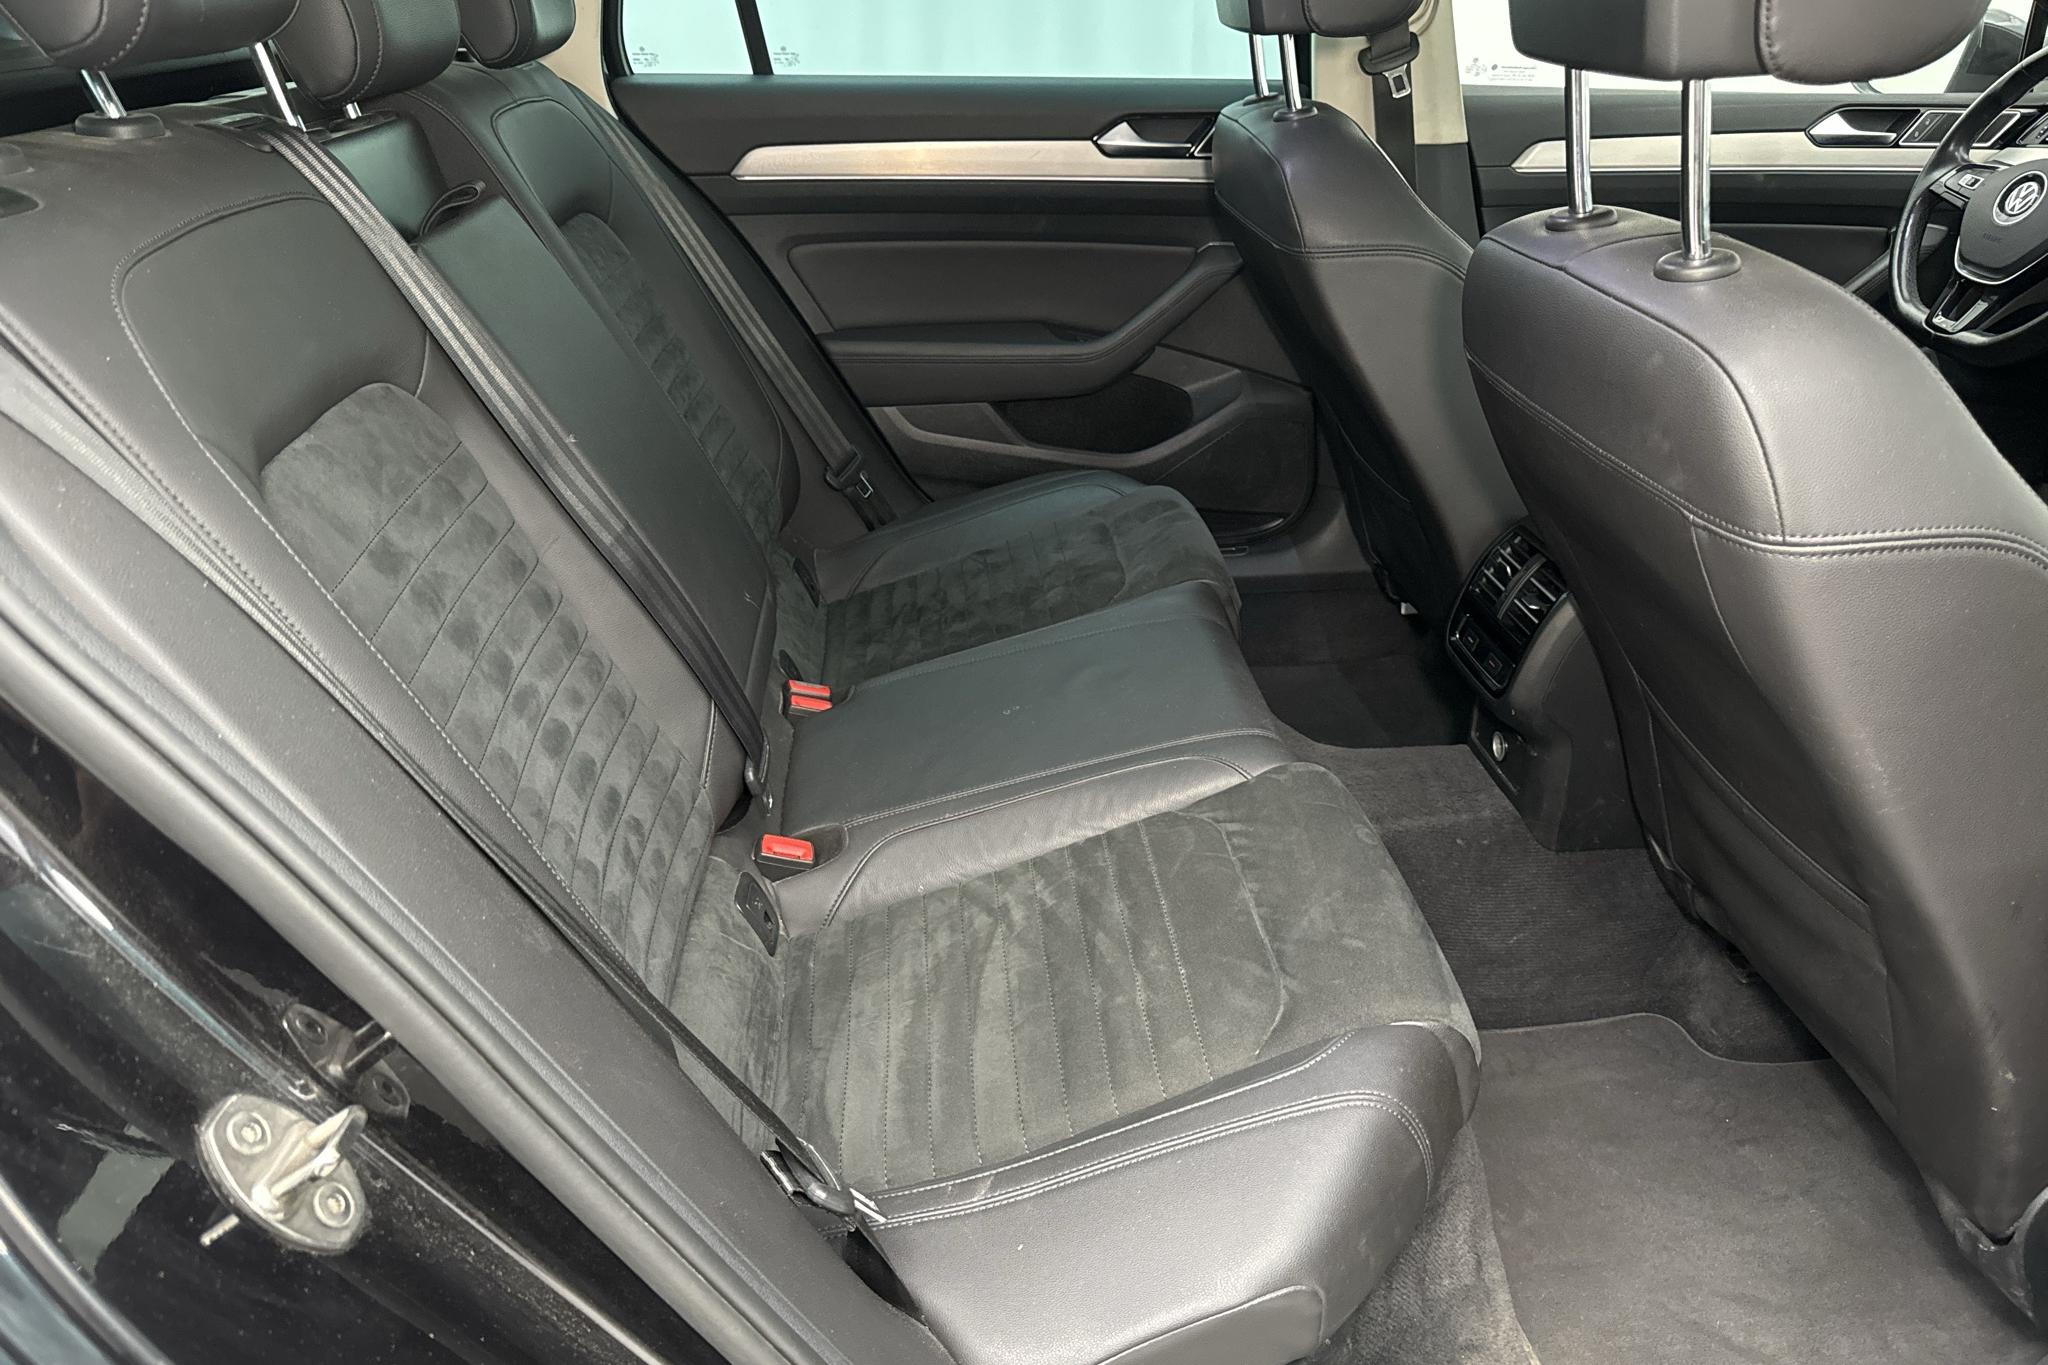 VW Passat 2.0 TDI Sportscombi 4MOTION (190hk) - 291 560 km - Automatic - black - 2016